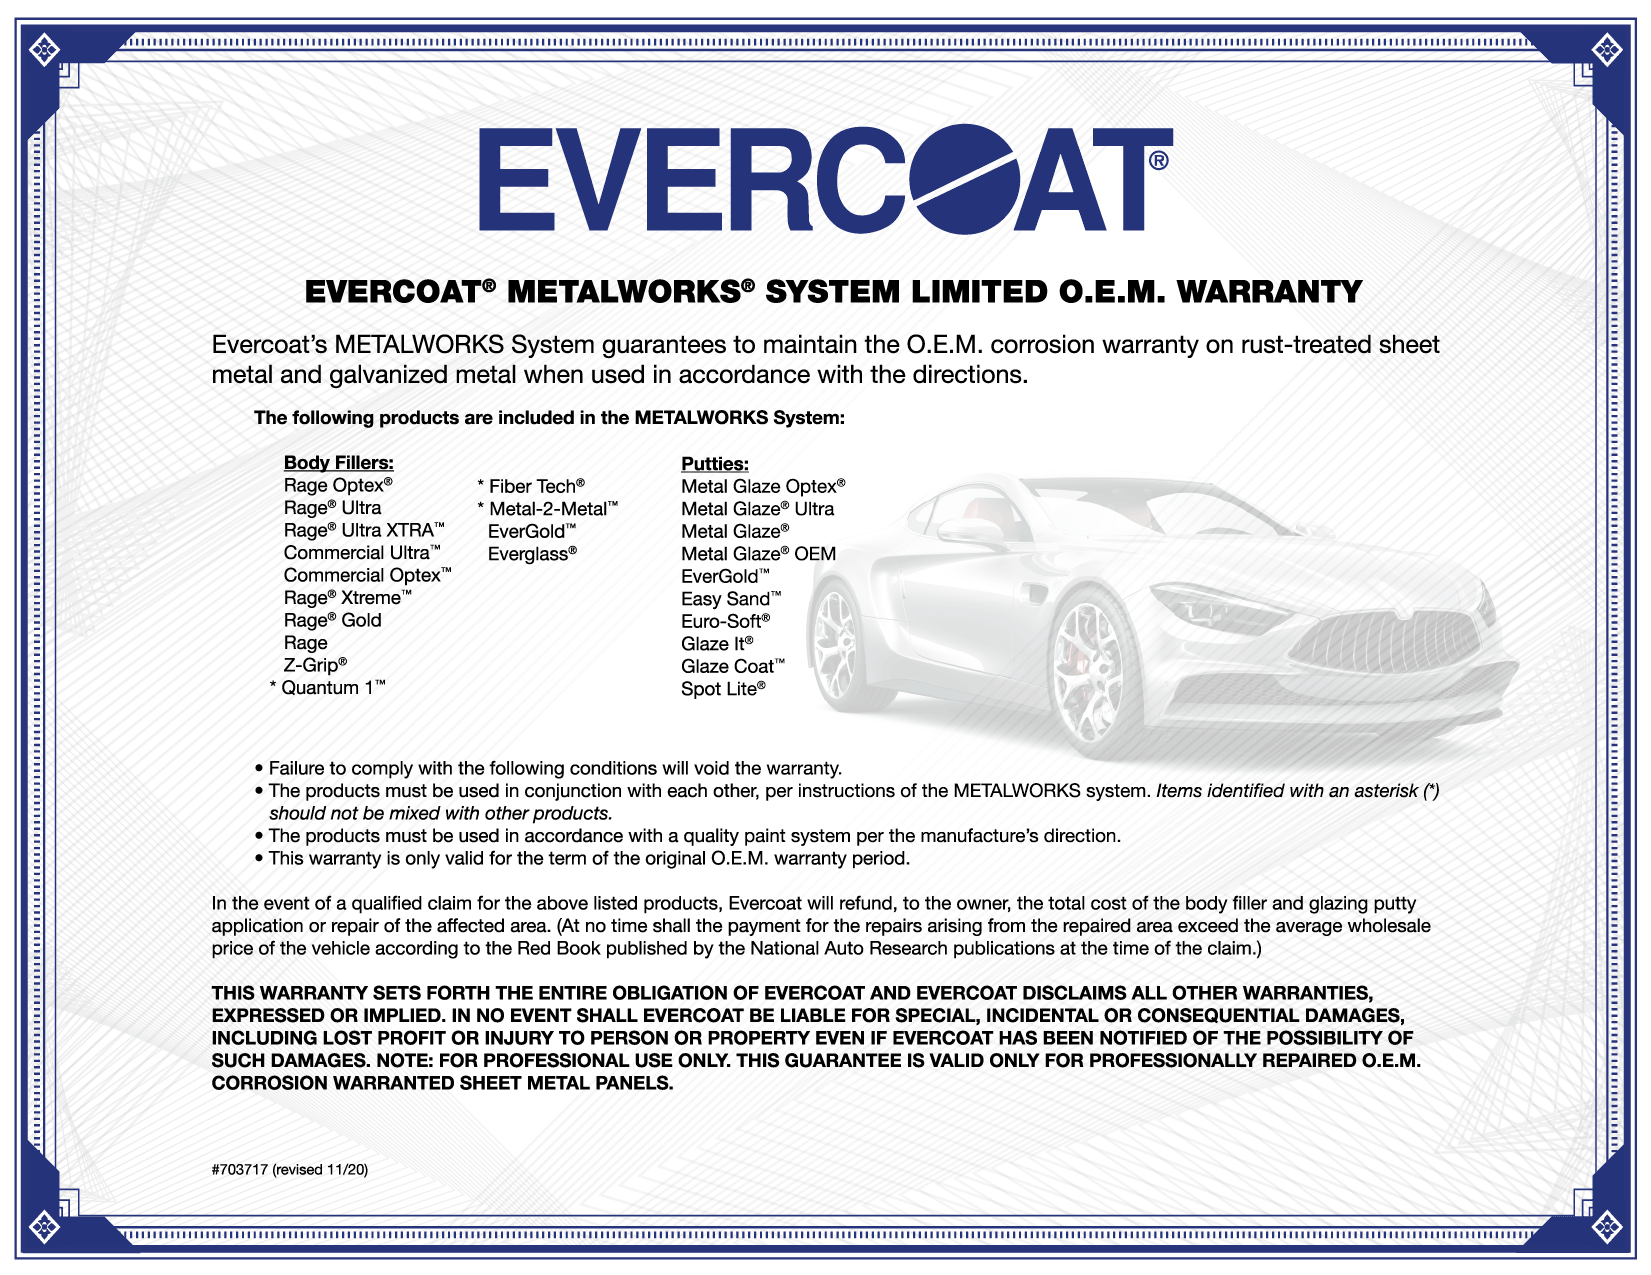 Evercoat 120 Rage Xtreme Gallon